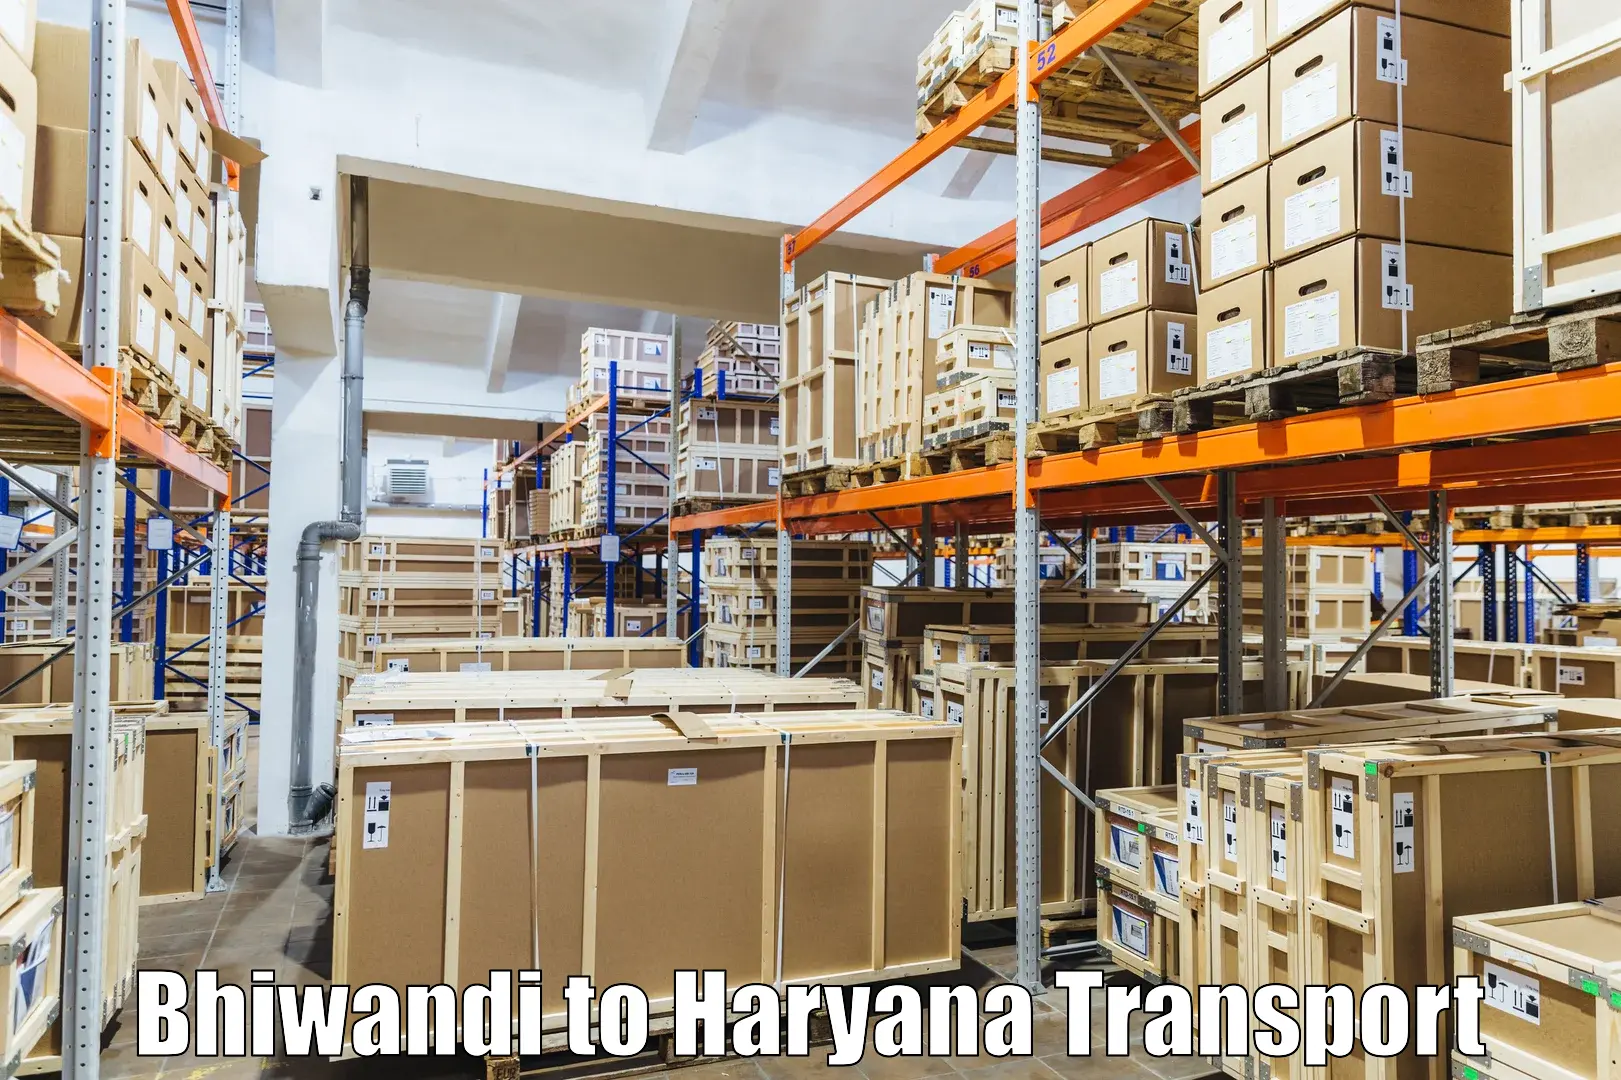 Transport in sharing in Bhiwandi to Panipat